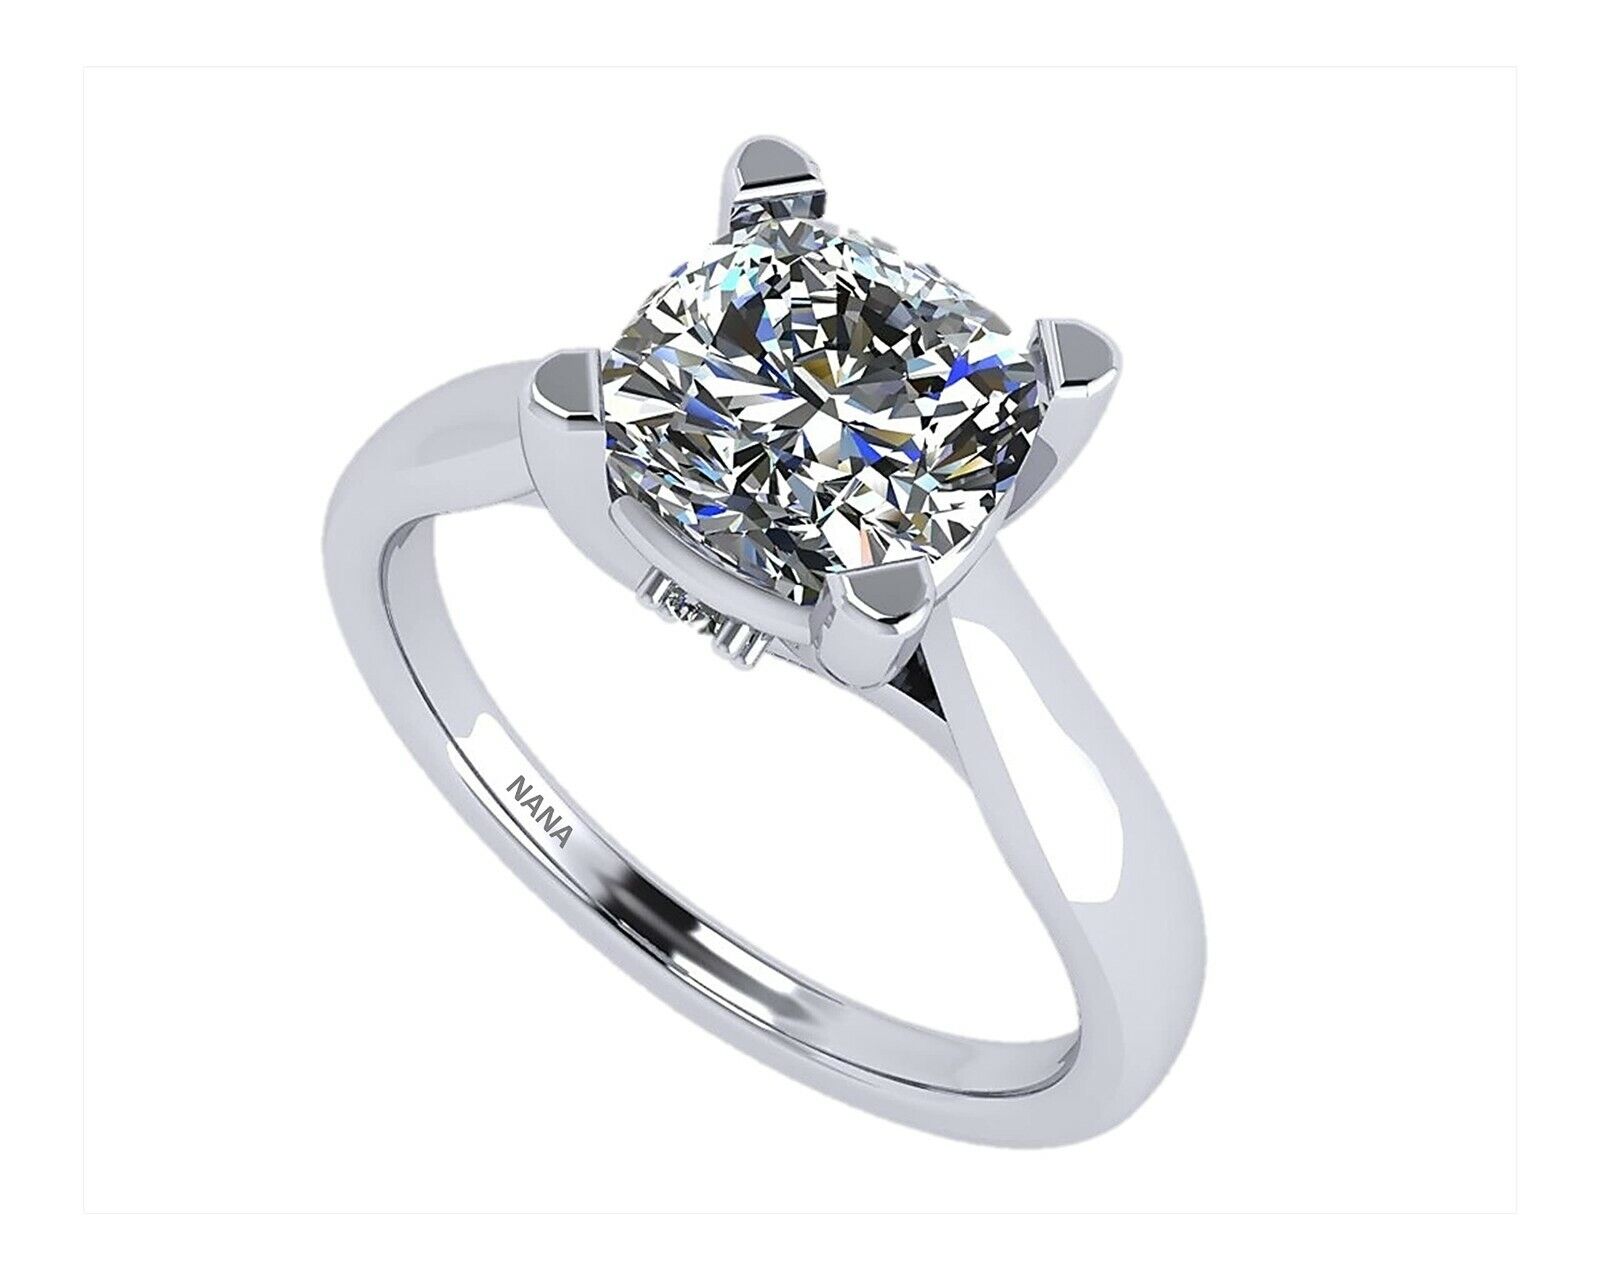  Elegance Defined: NANA Jewels Lucita Cushion Cut CZ Engagement Ring - Size 4